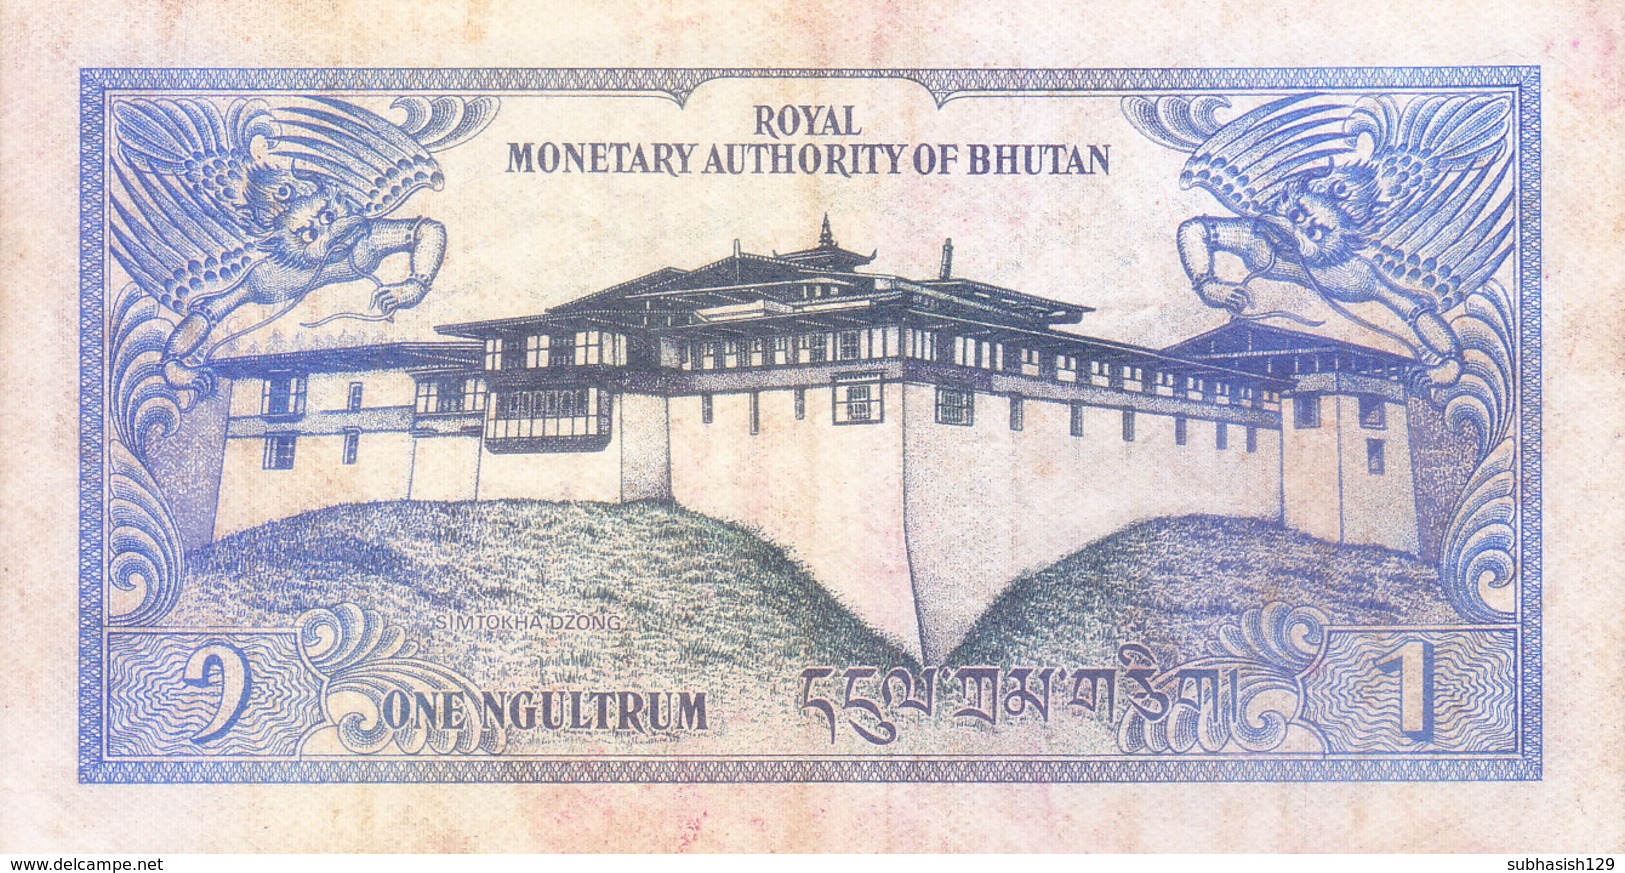 BHUTAN 1986 CURRENCY NOTE / BANK NOTE - 1 NGULTRUM - Bhutan